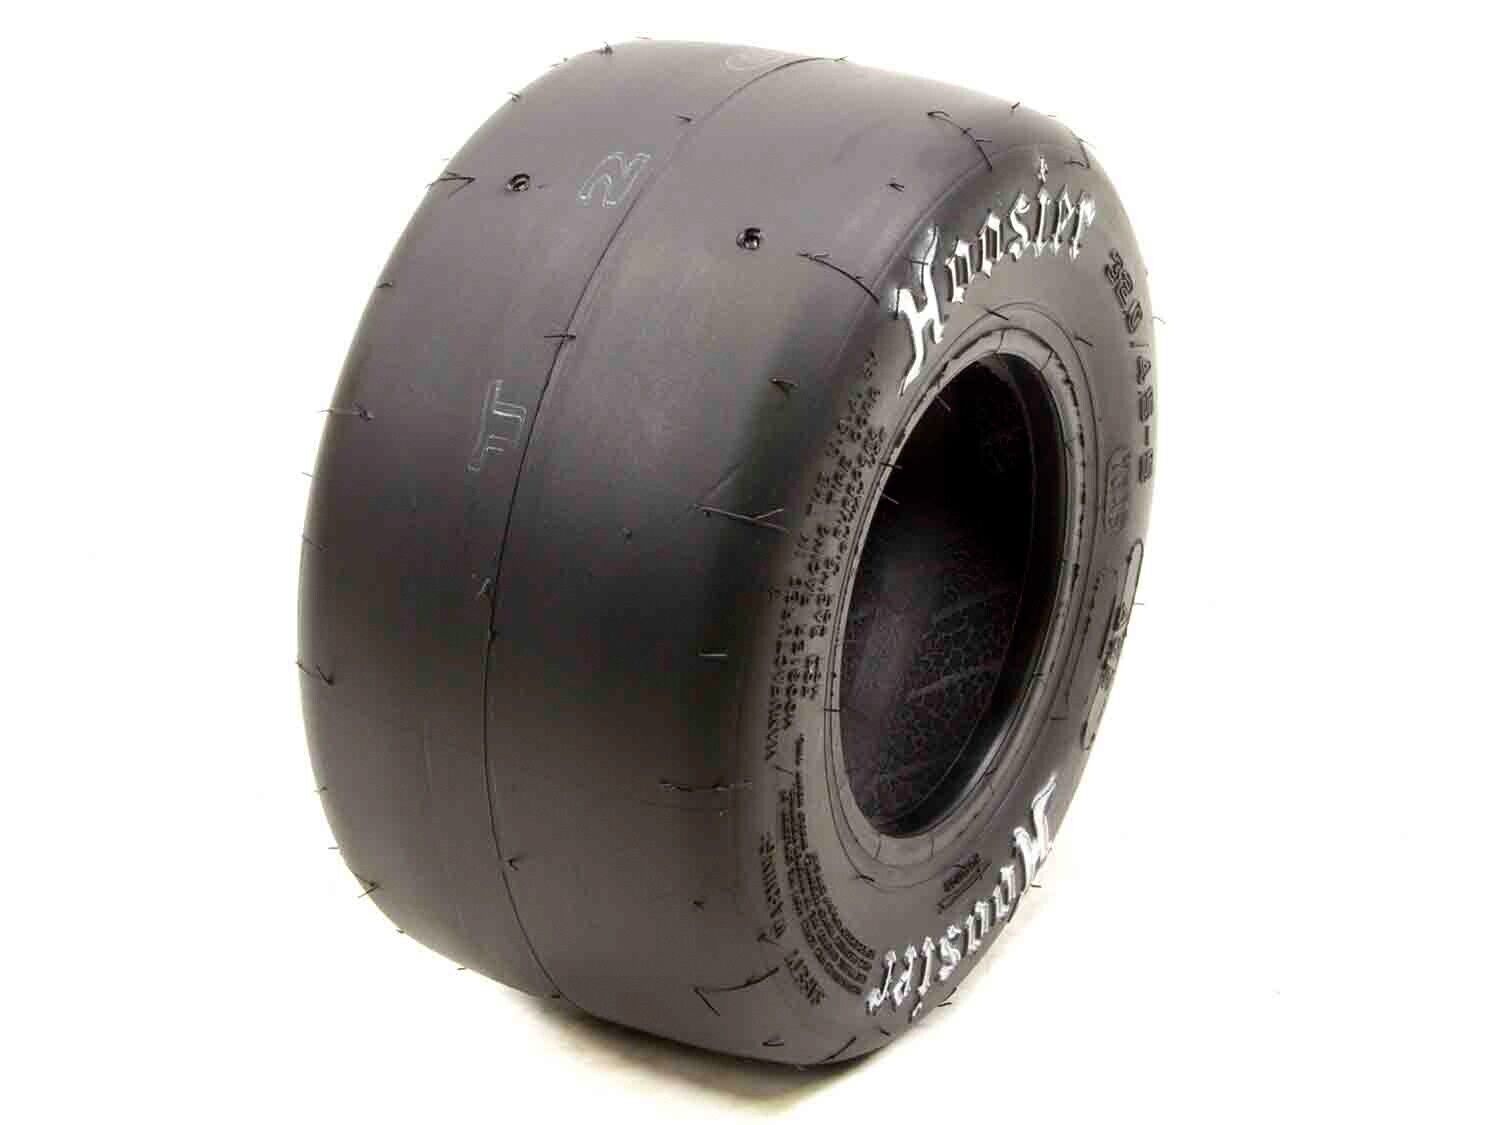 Hoosier 15031A35 Asphalt Quarter Midget Tire 31.0 x 4.5-5 Circle Track